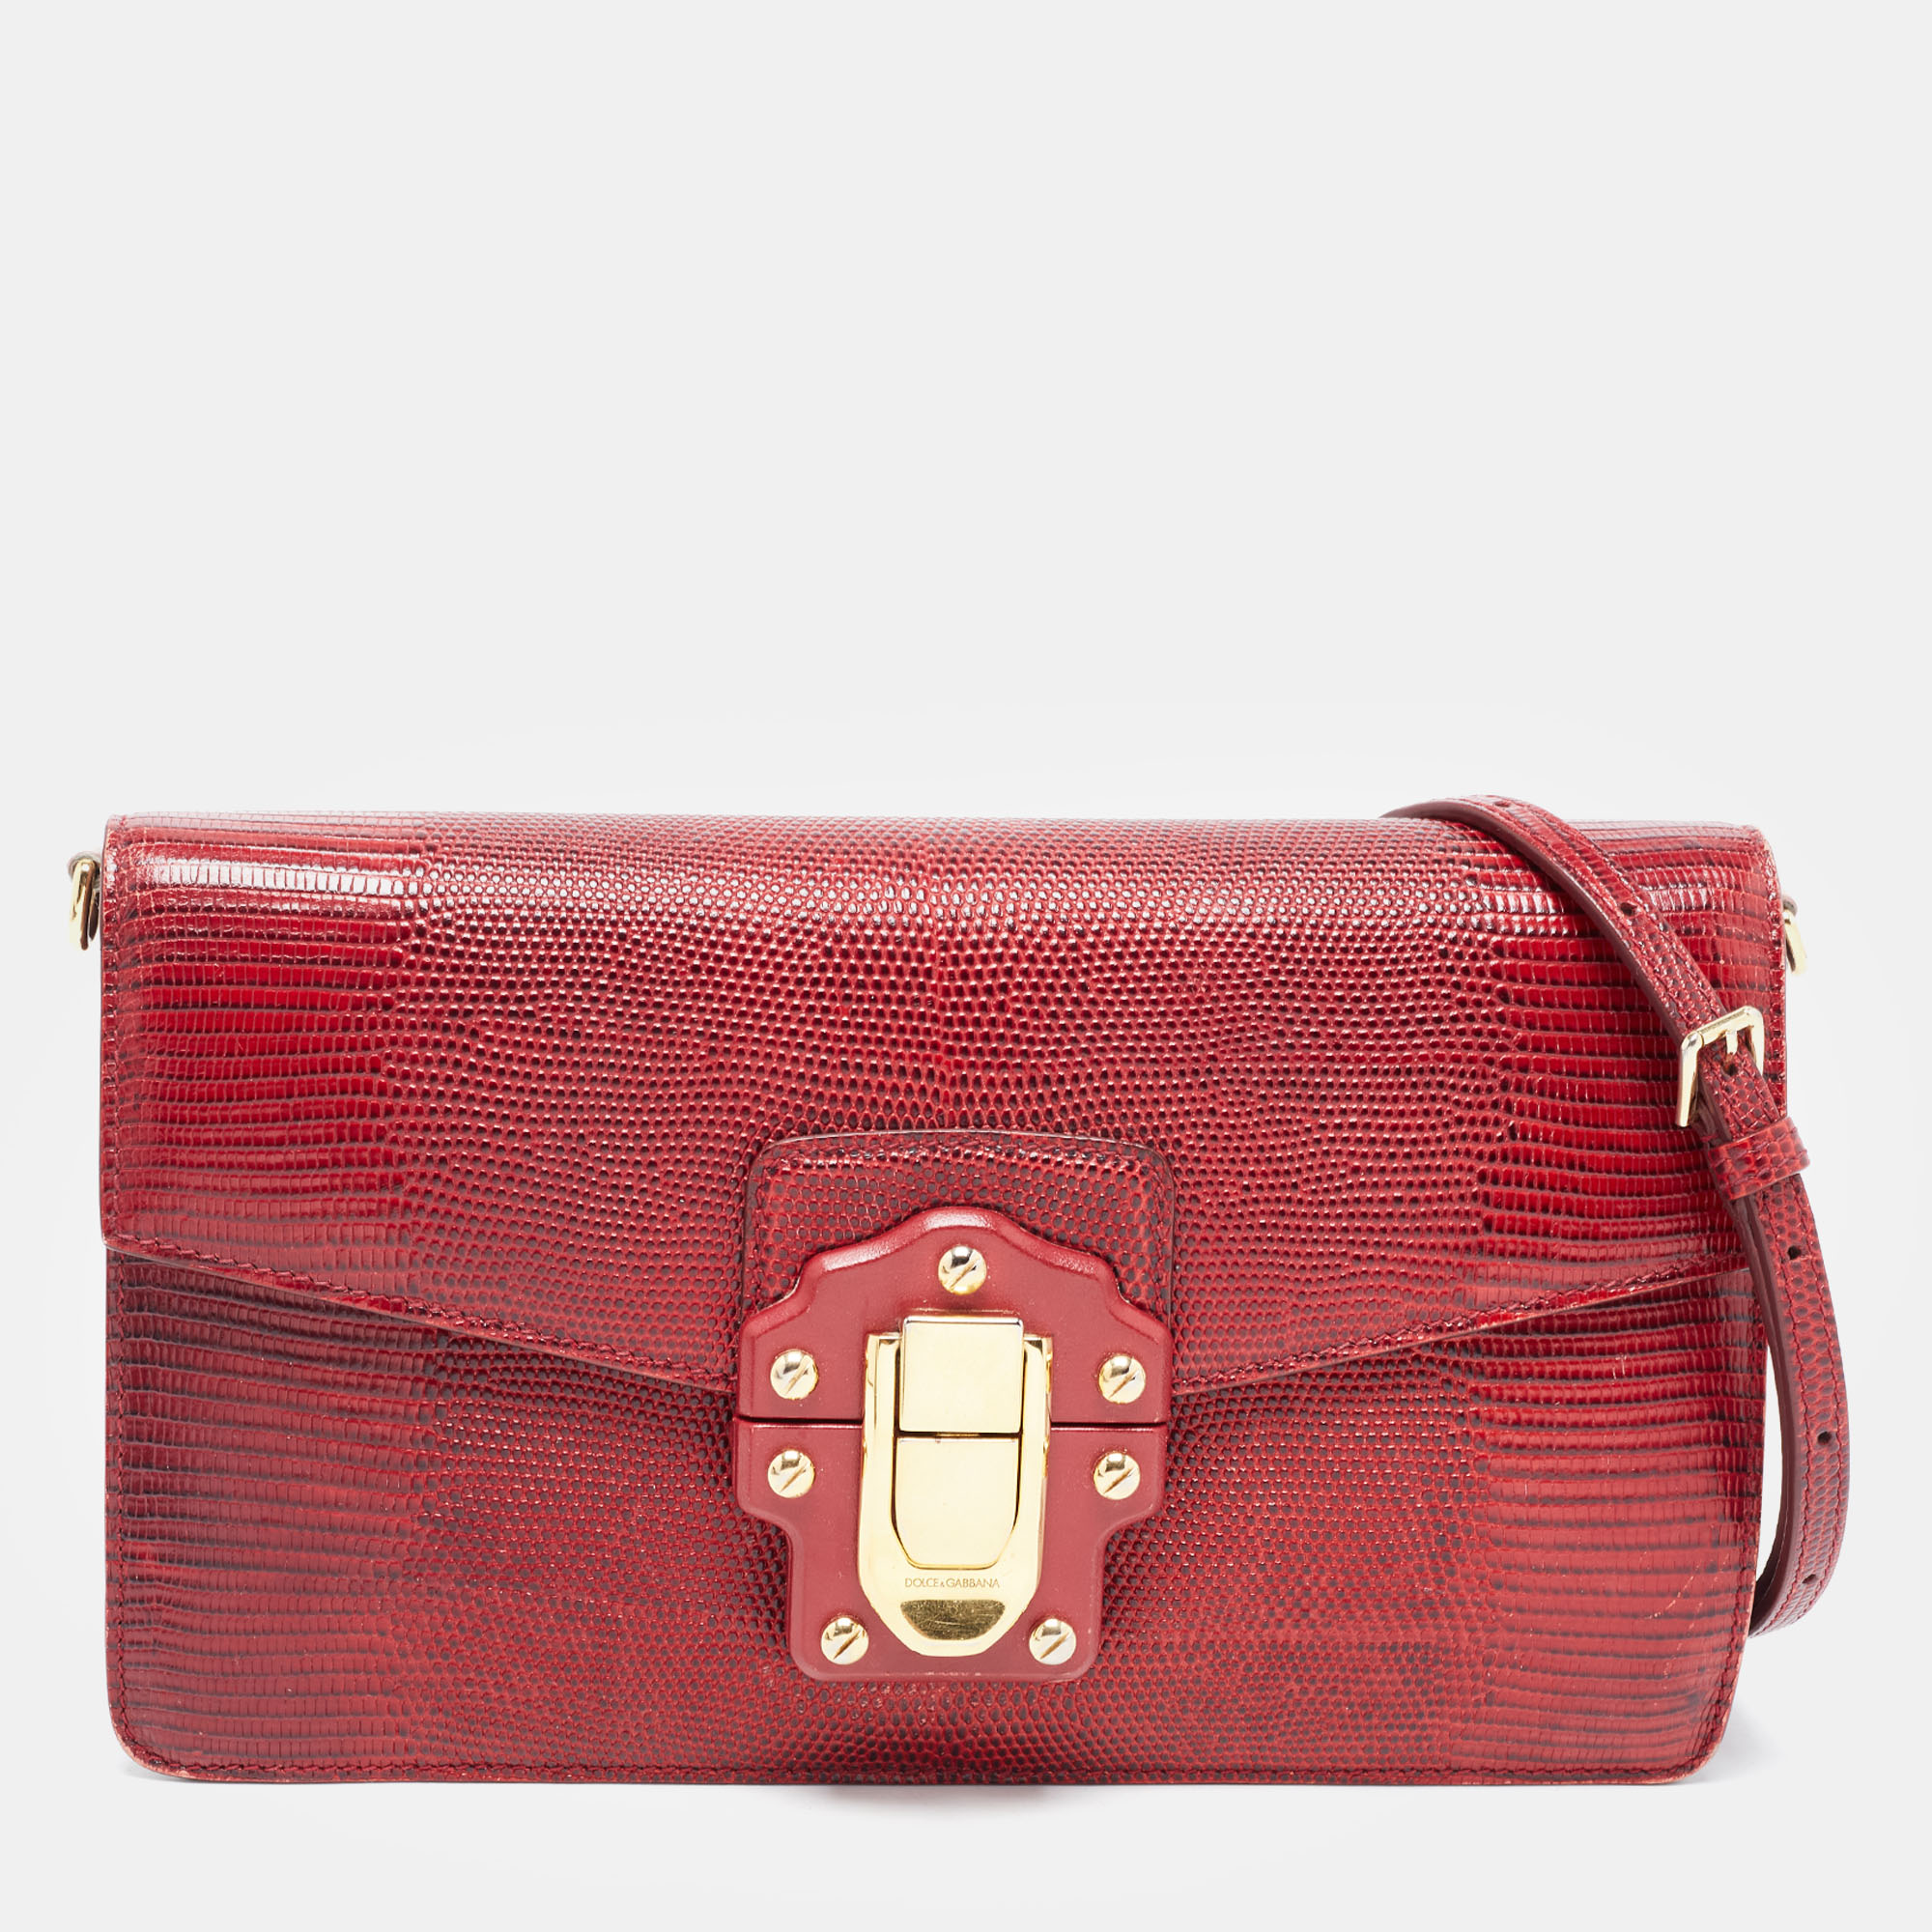 Dolce & Gabbana Dark Red Lizard Embossed Leather Lucia Shoulder Bag